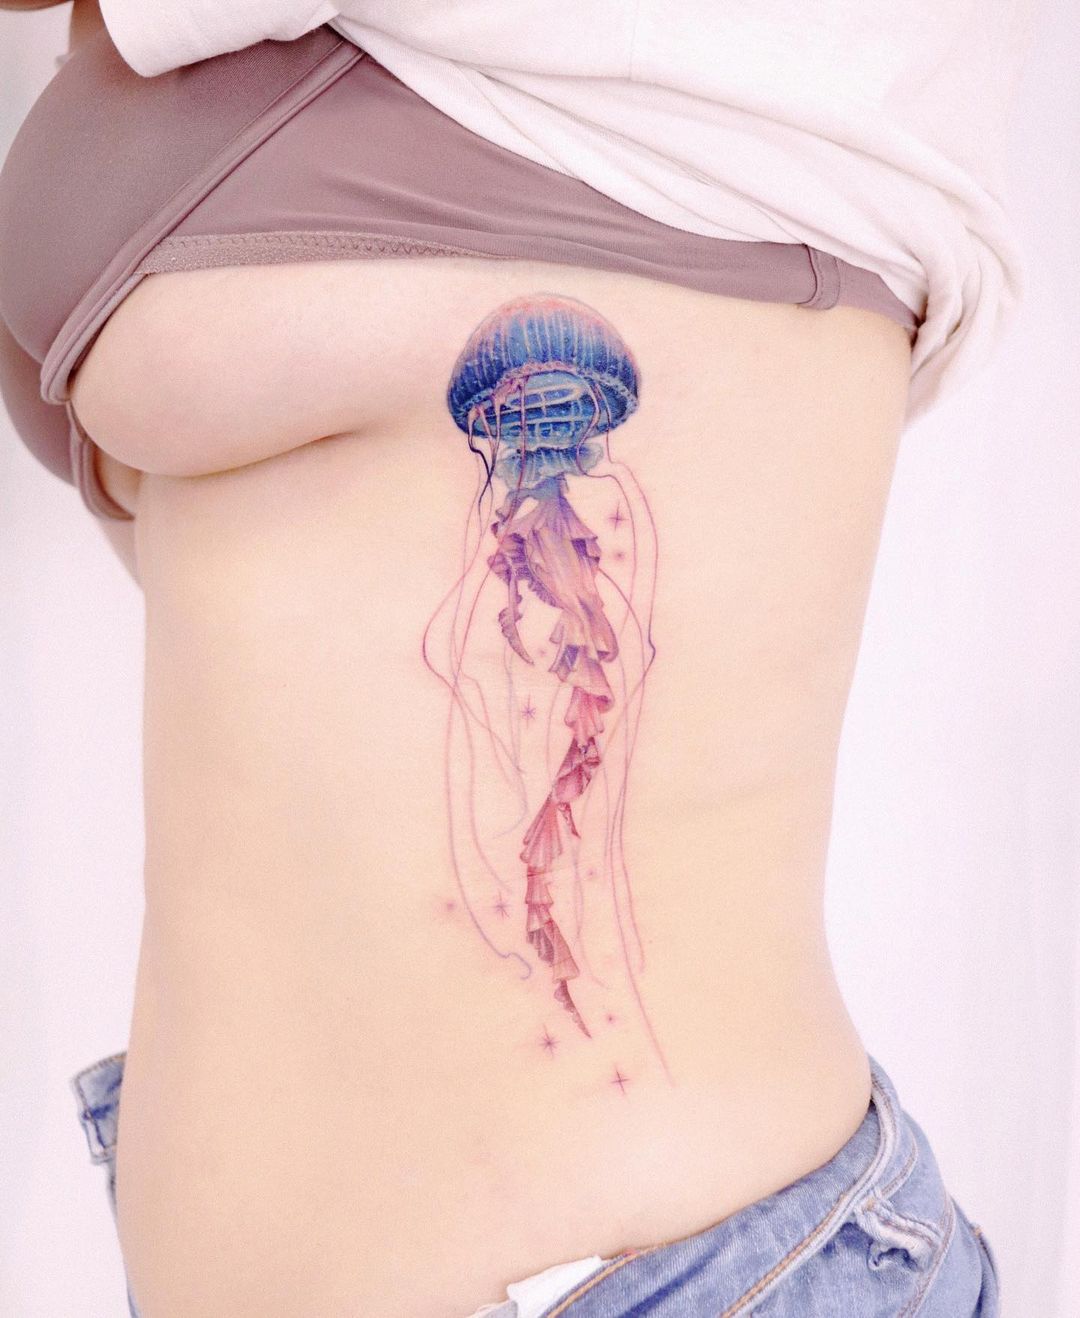 10 Best Jellyfish Tattoo Ideas for Ocean Lovers